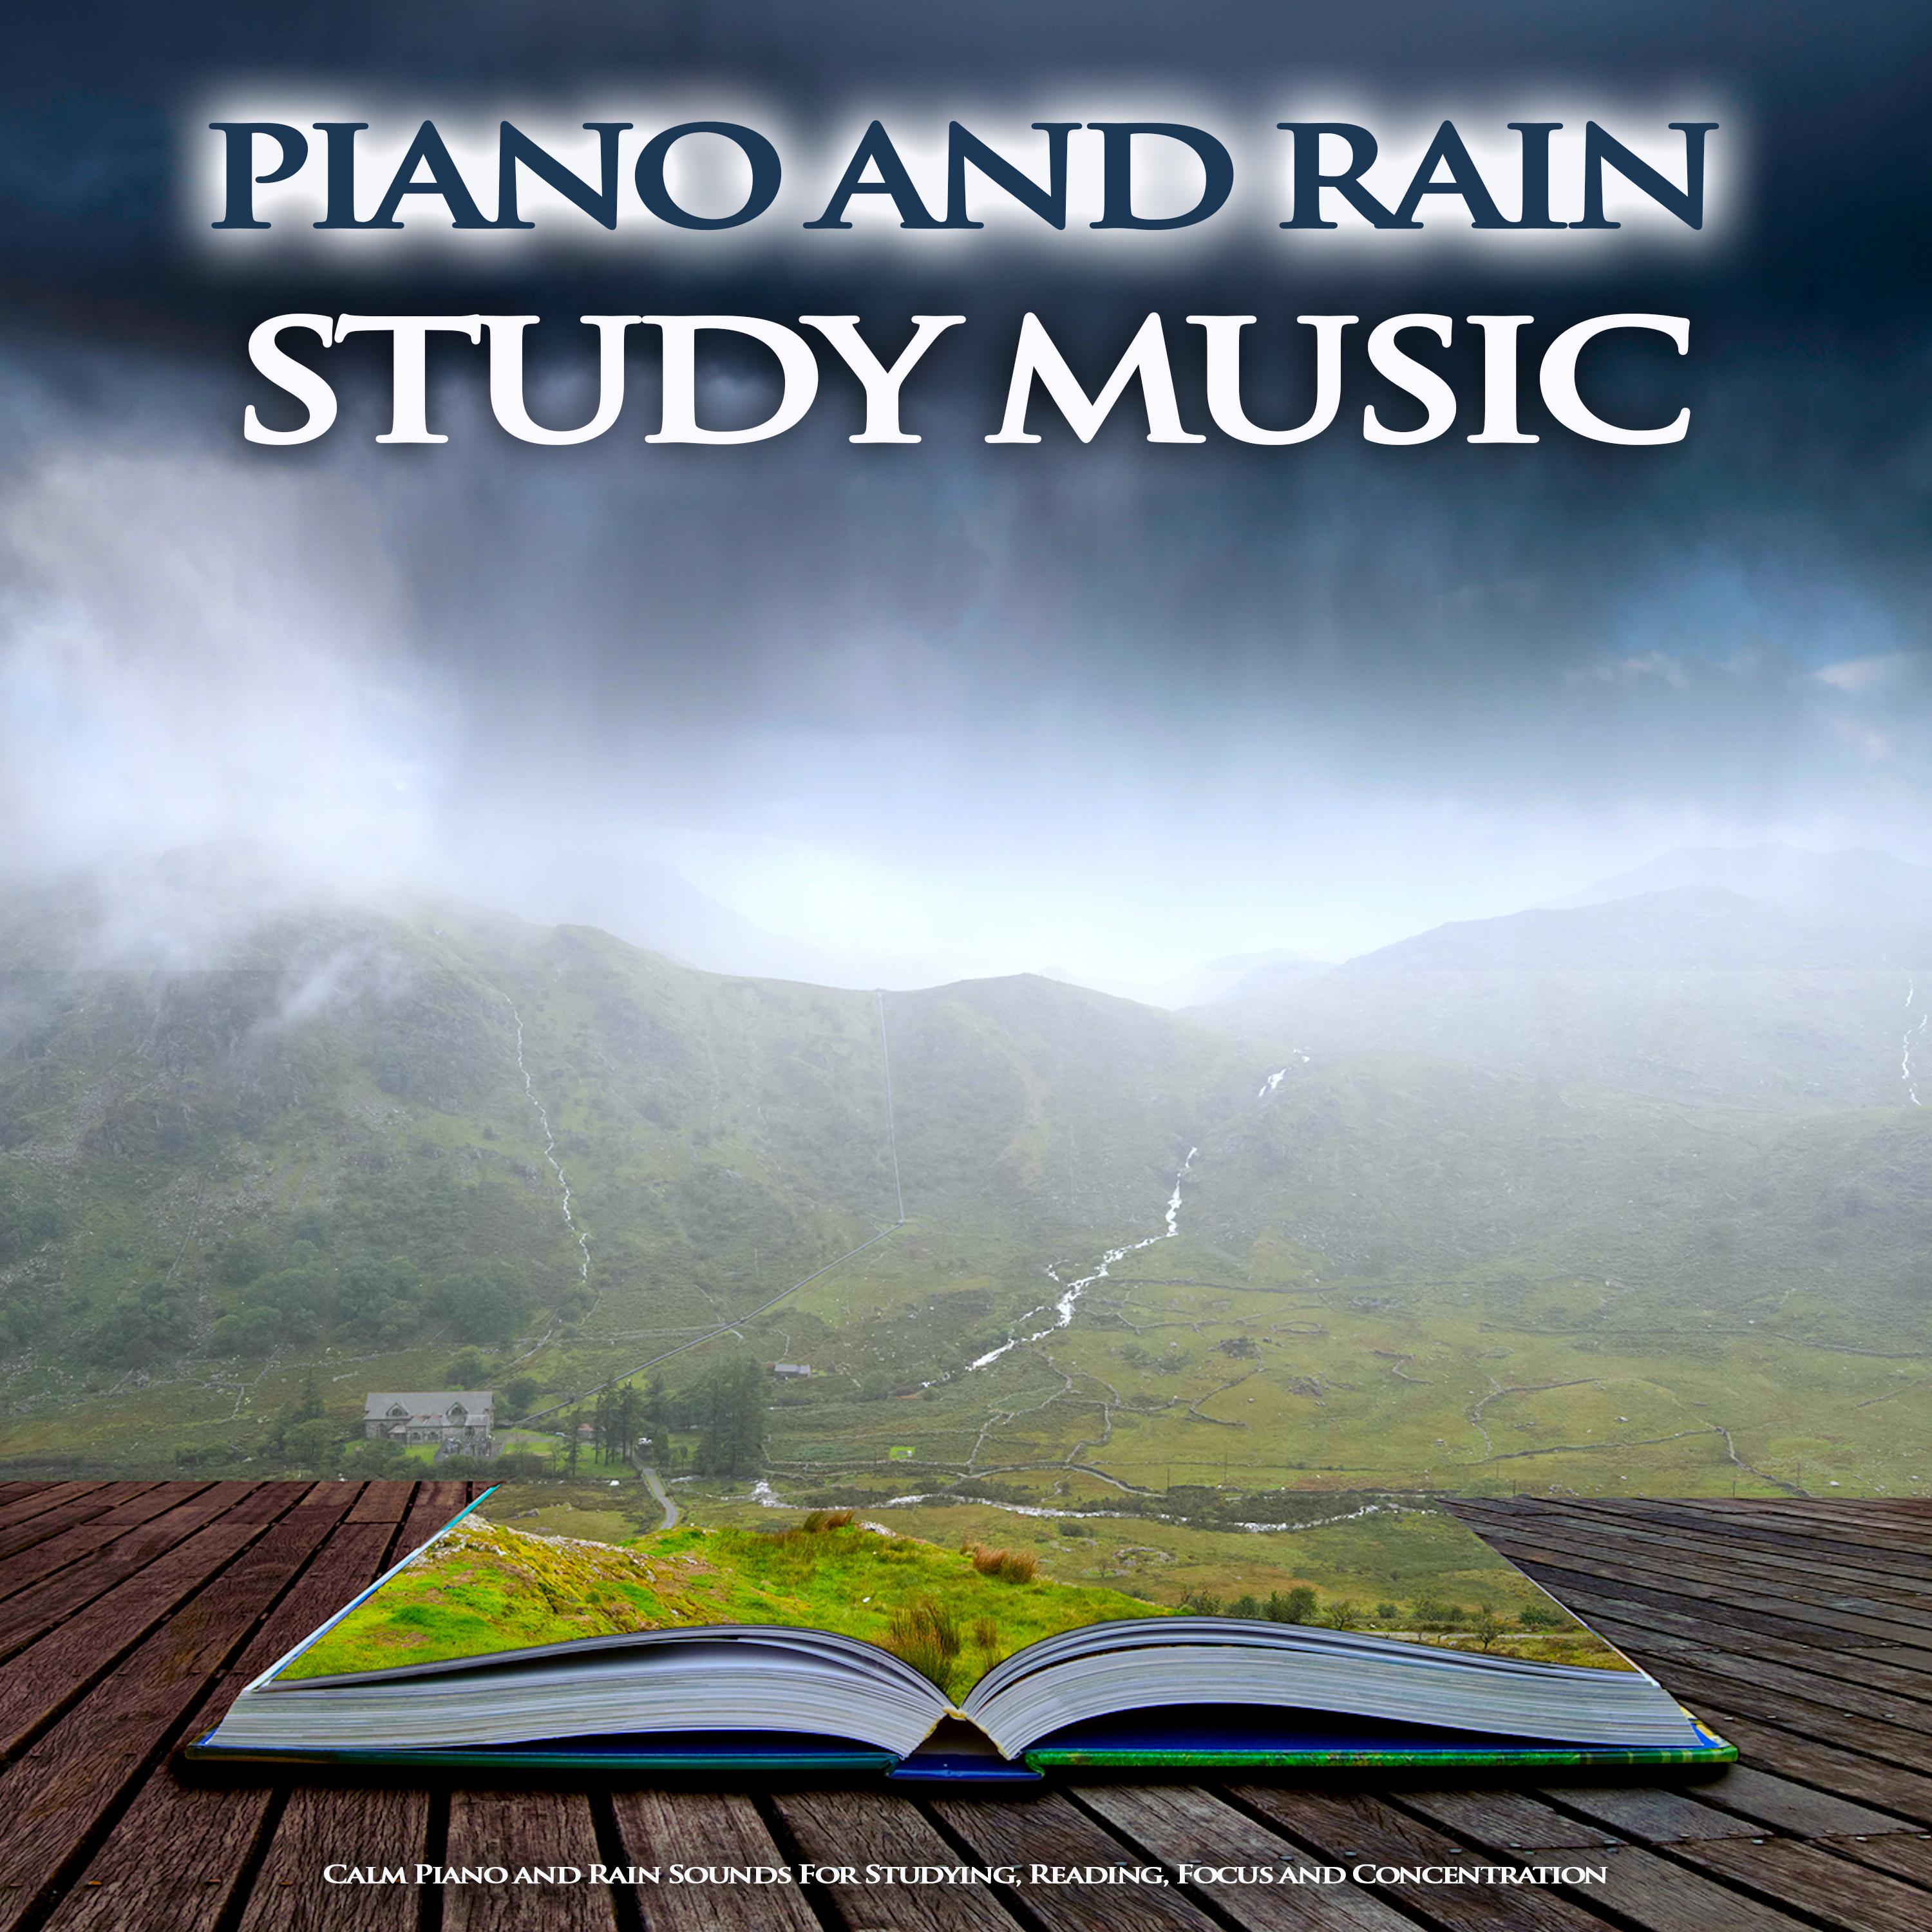 Rain Sounds Reading Music